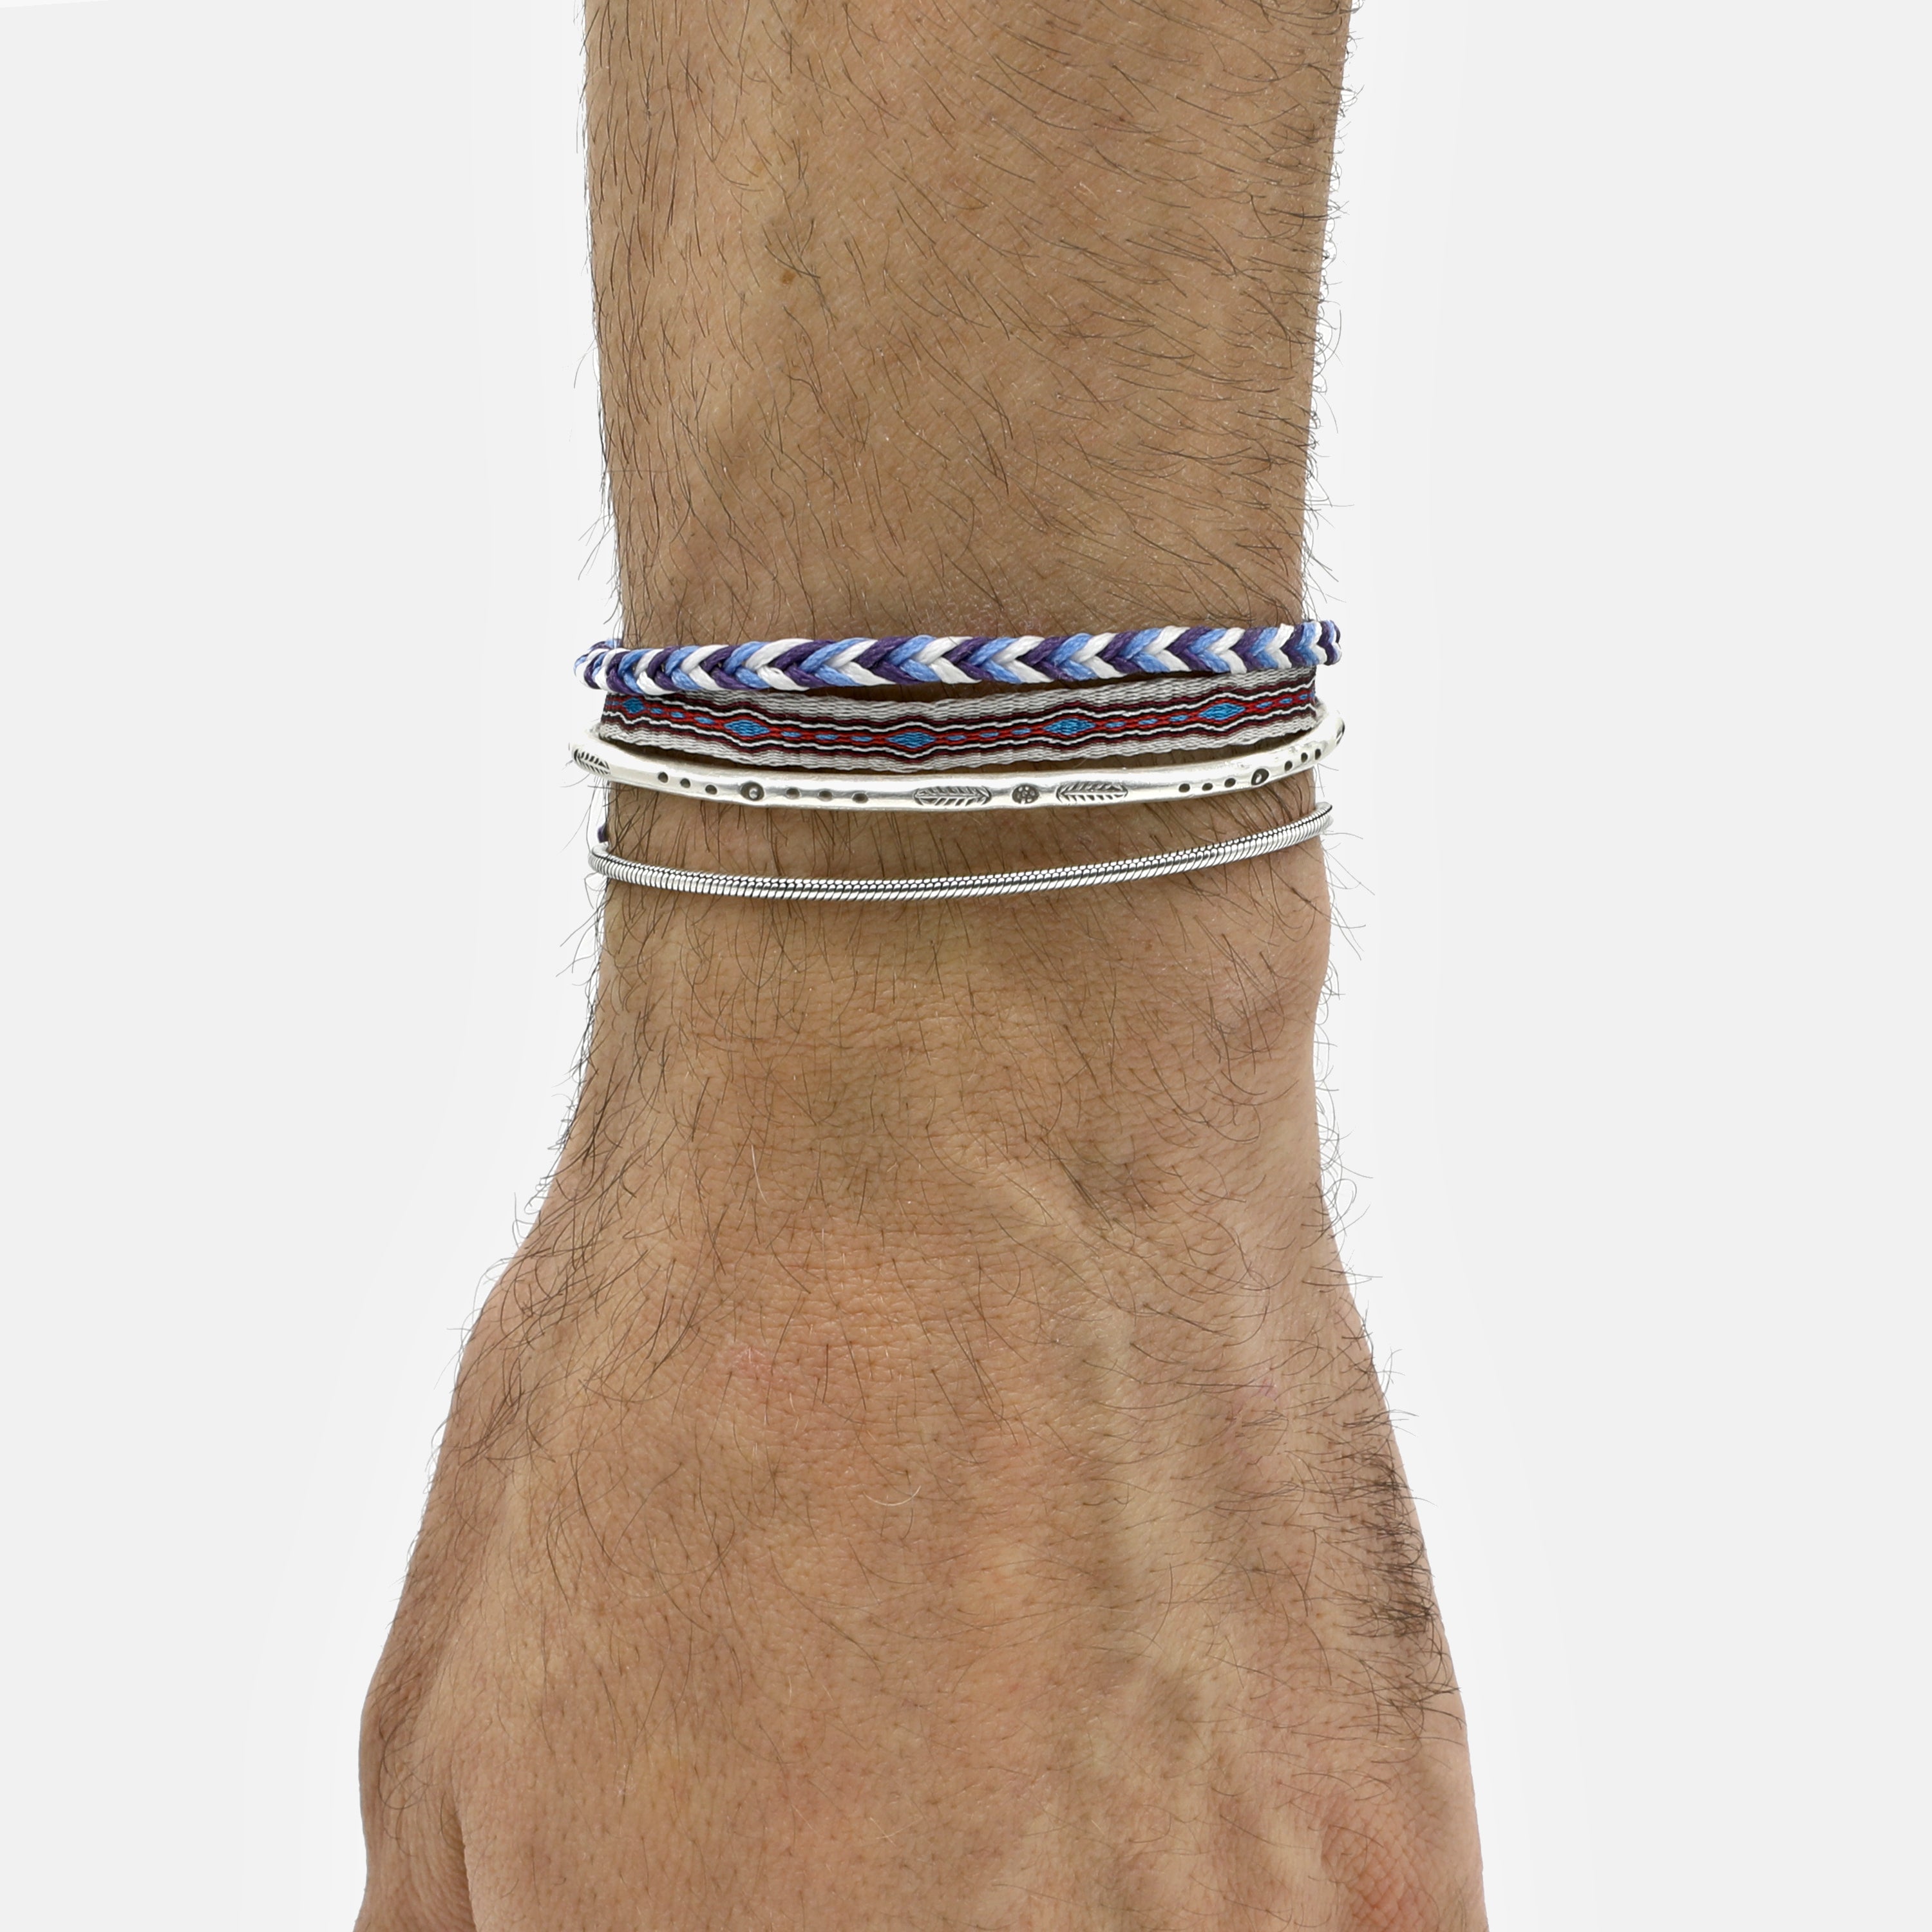 Adjustable Mini Braided Bracelet (Shade of Blue)-Bracelet-Kompsós